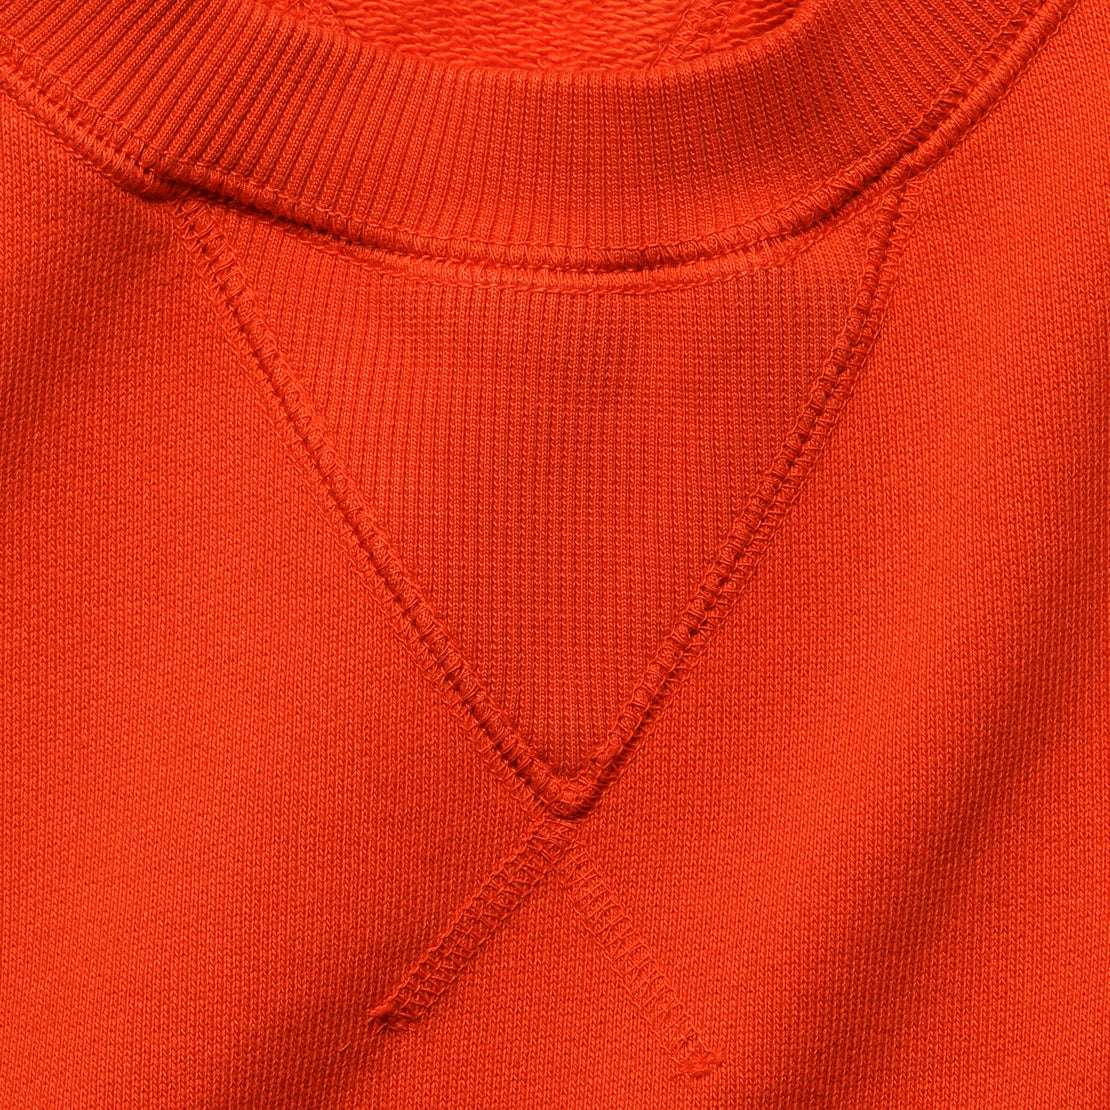 Crew Neck Sweatshirt - Chili - Alex Mill - STAG Provisions - Tops - Fleece / Sweatshirt